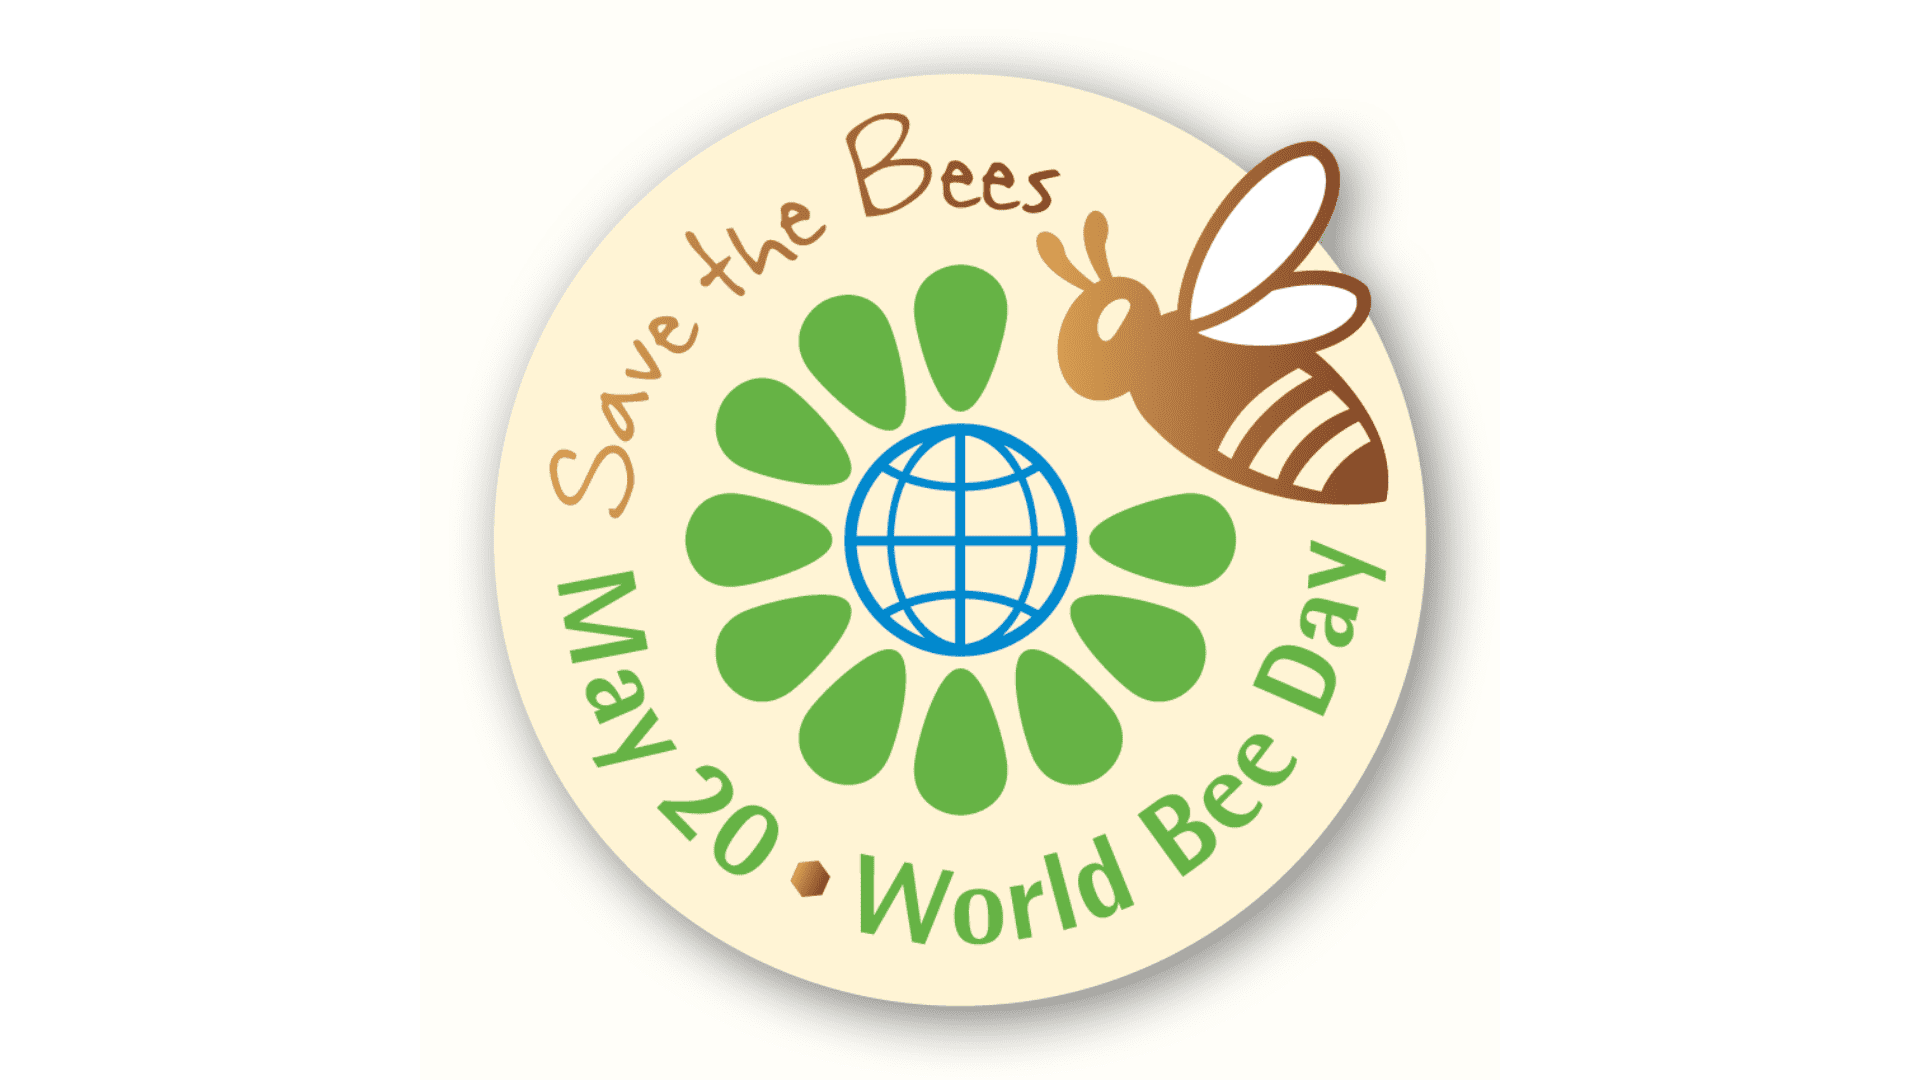 World Bee Day